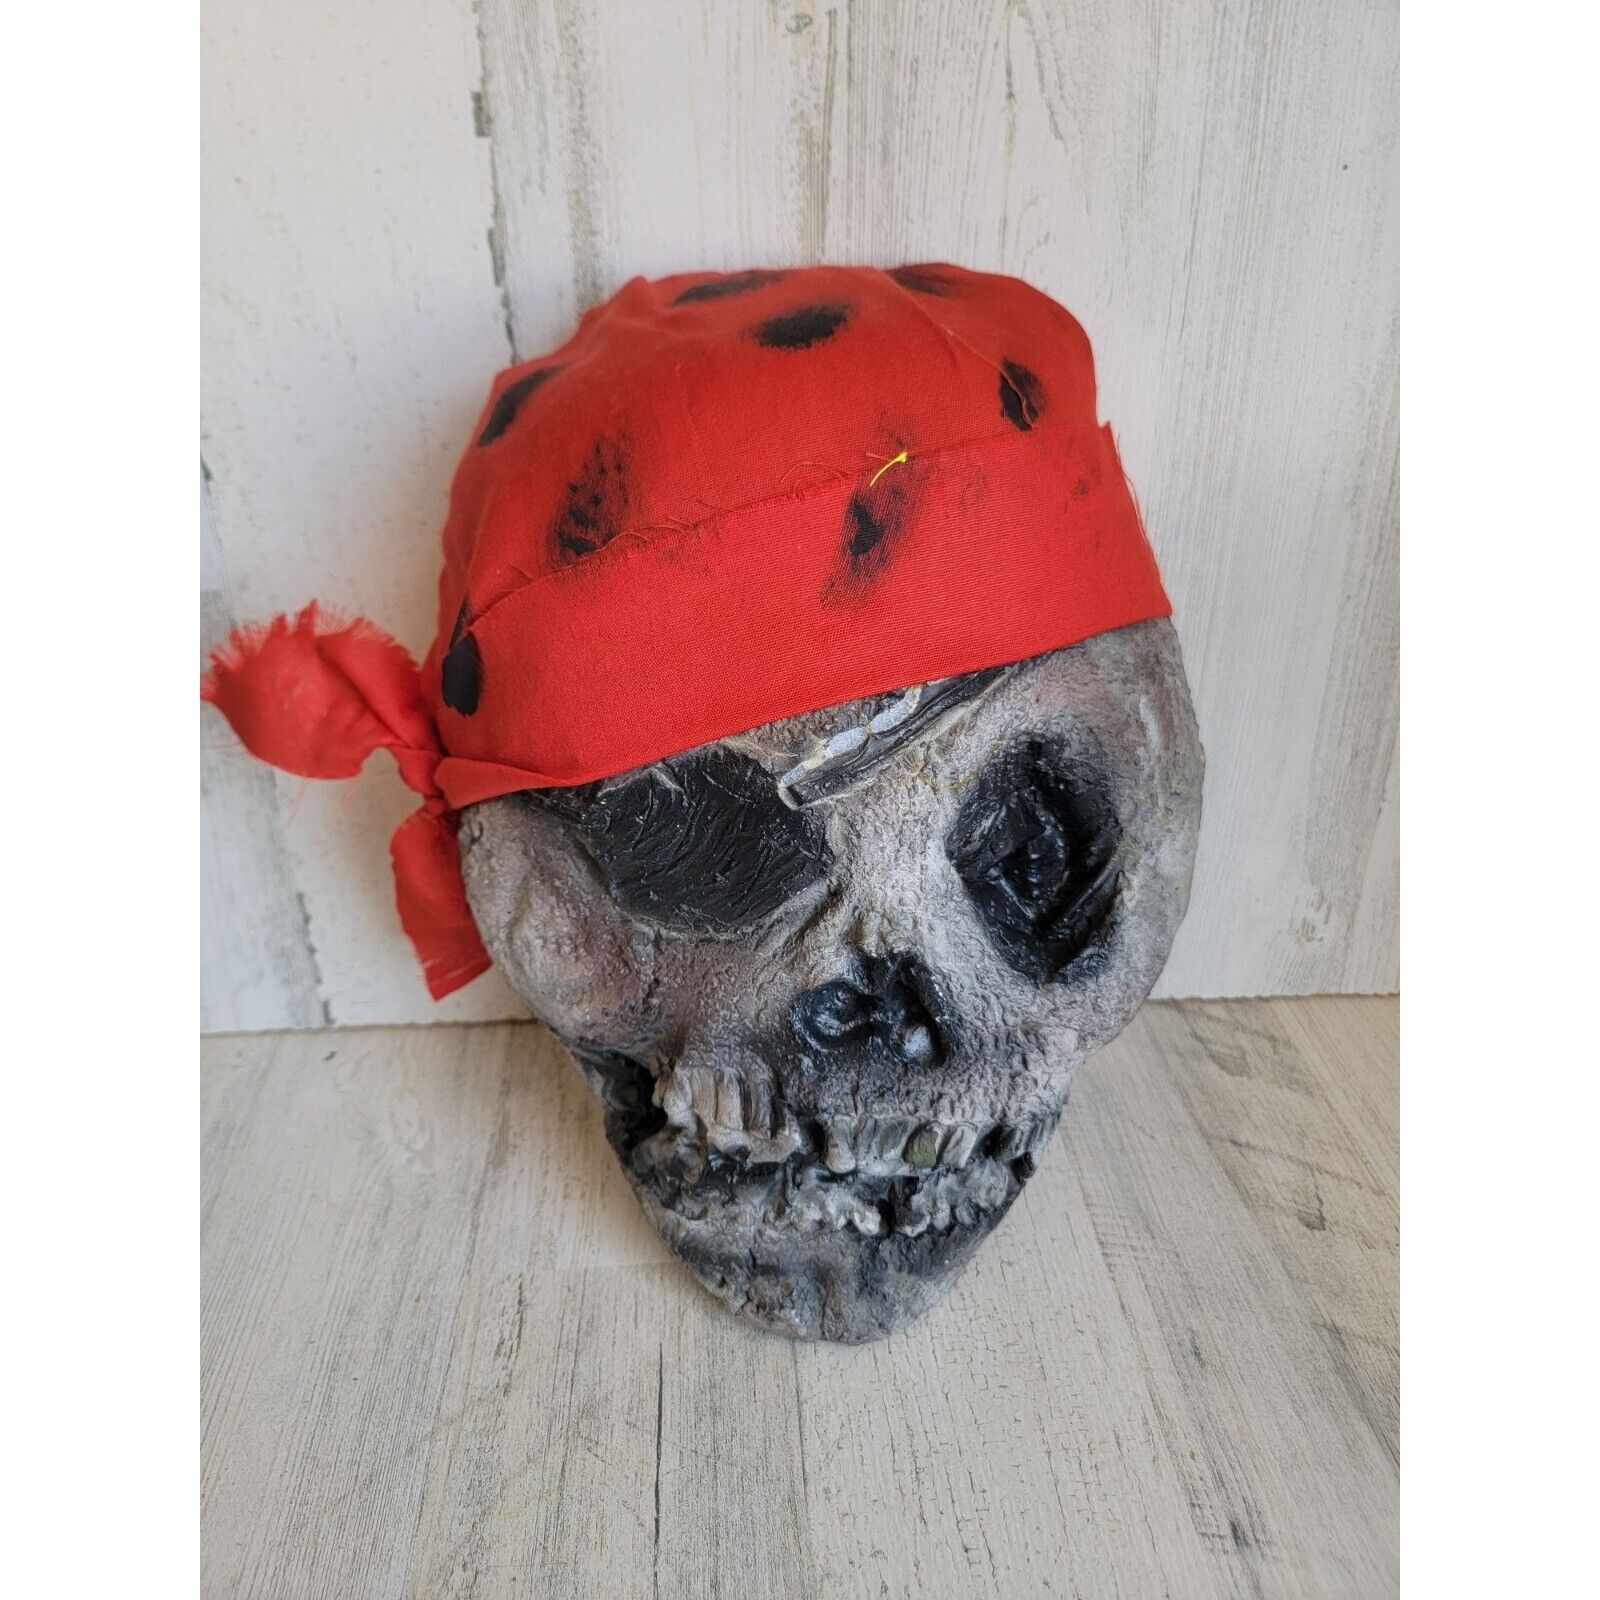 Vintage rubber plush pirate skull skeleton Halloween prop